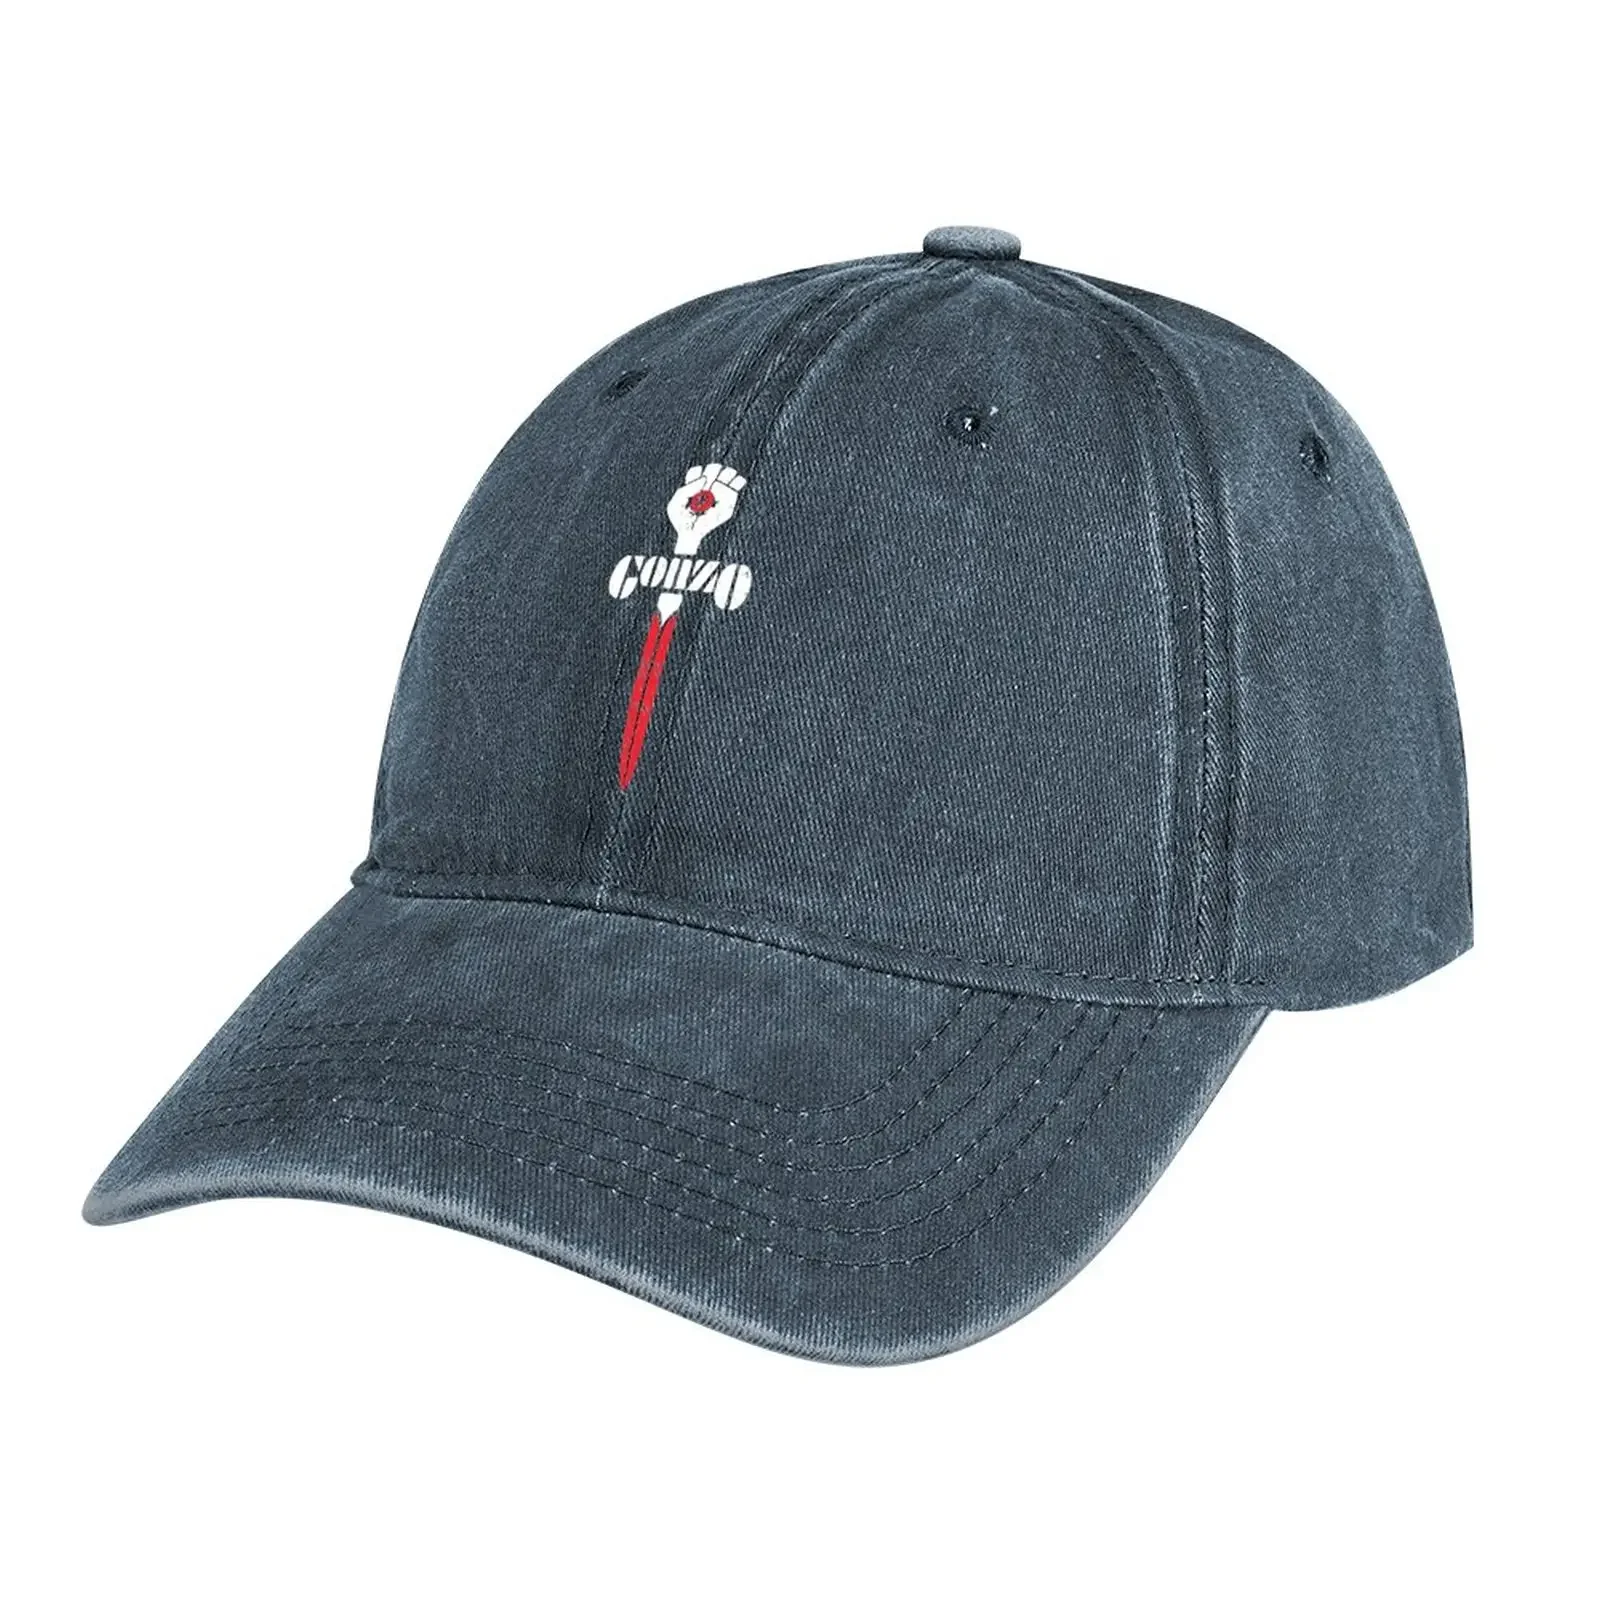 

Gonzo Symbol Hunter S Thompson Cowboy Hat Hard Hat Thermal Visor Hat Man For The Sun Golf Hat Women Men's